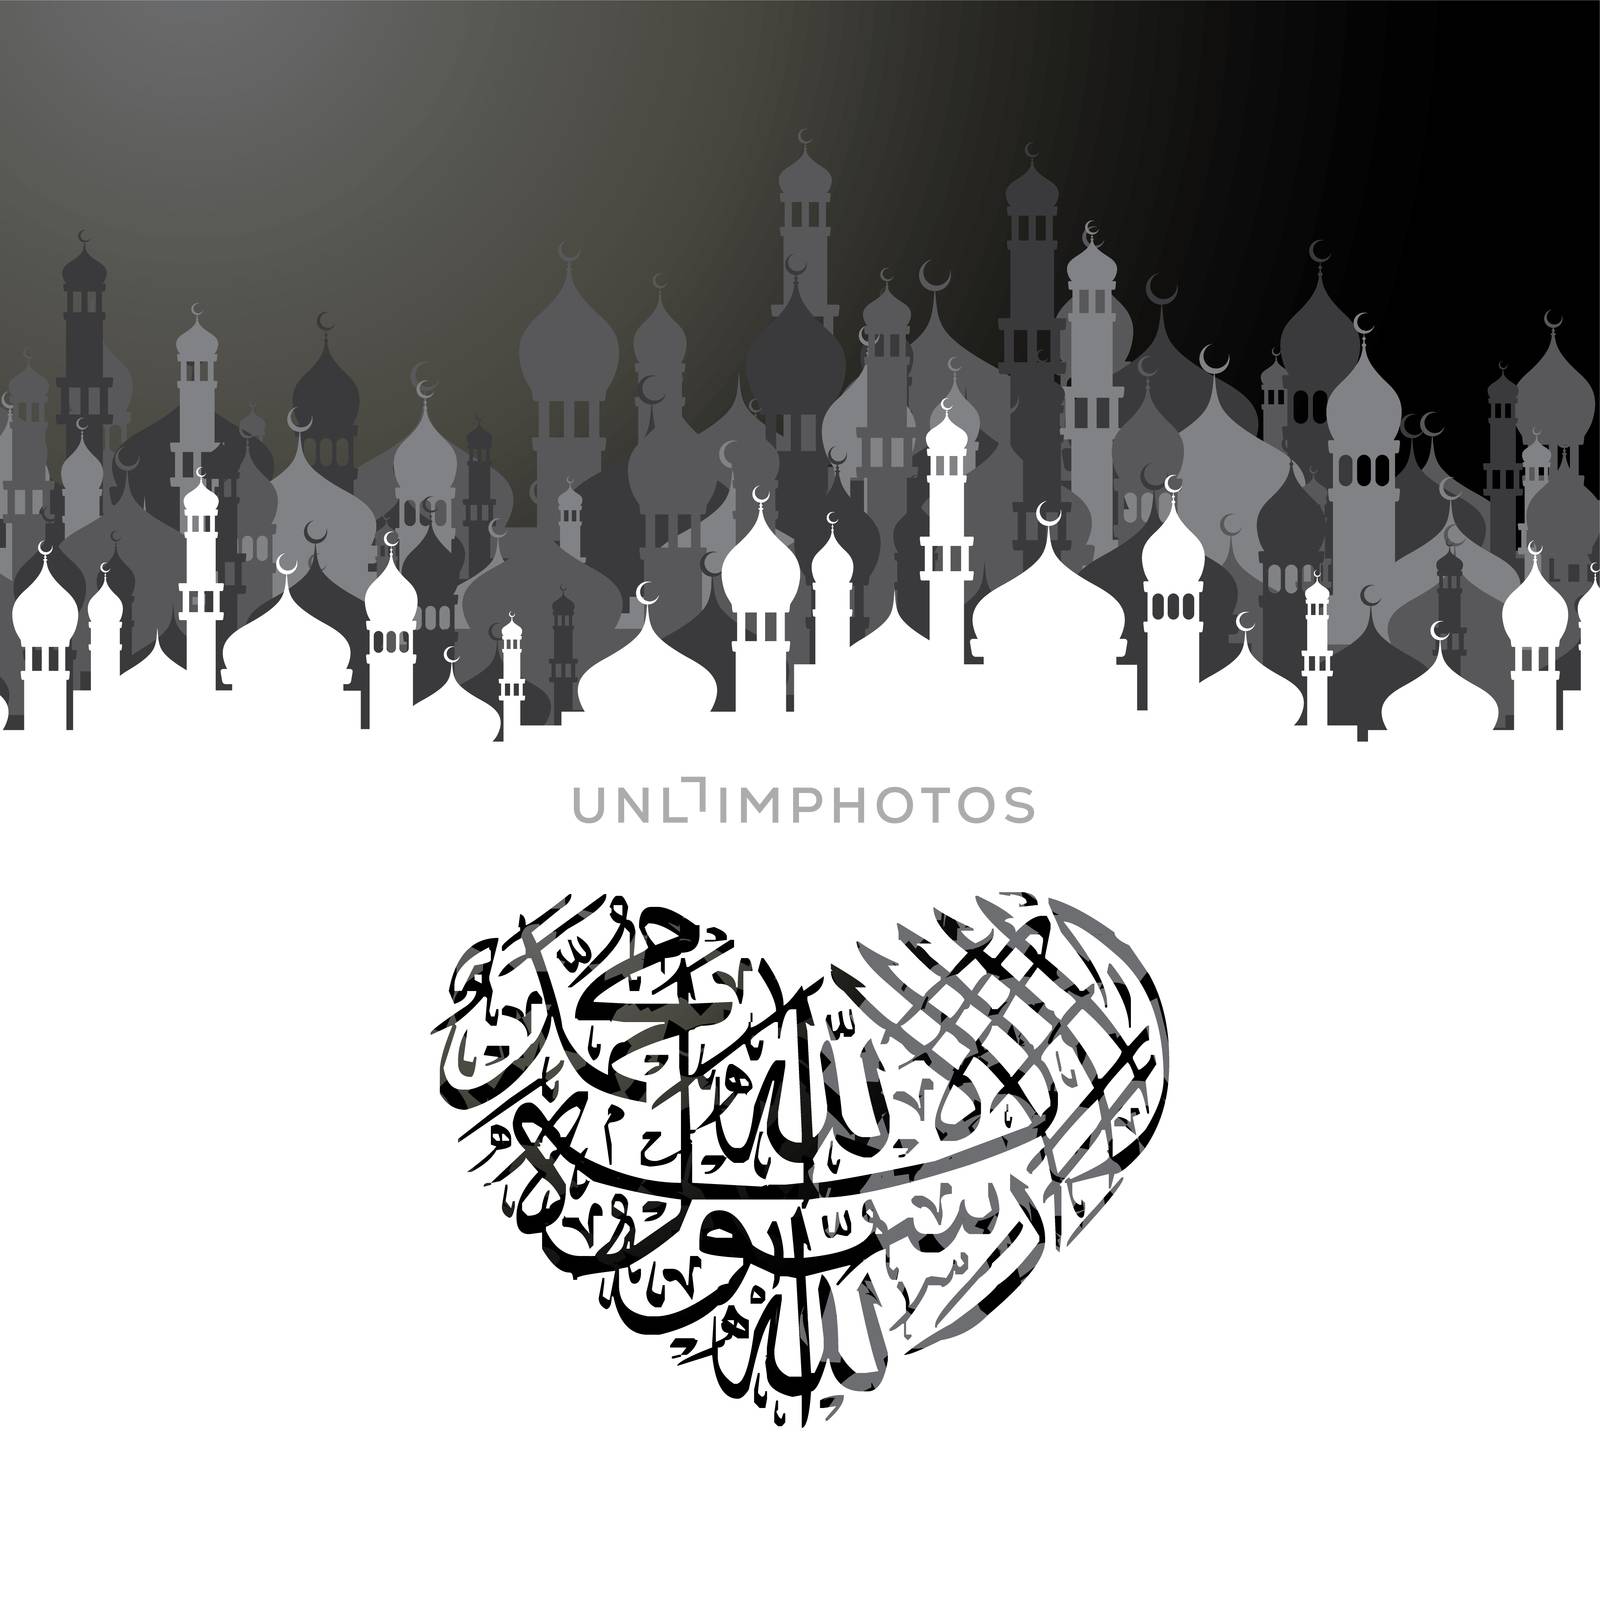 islamic calligraphy art theme vector art illustration